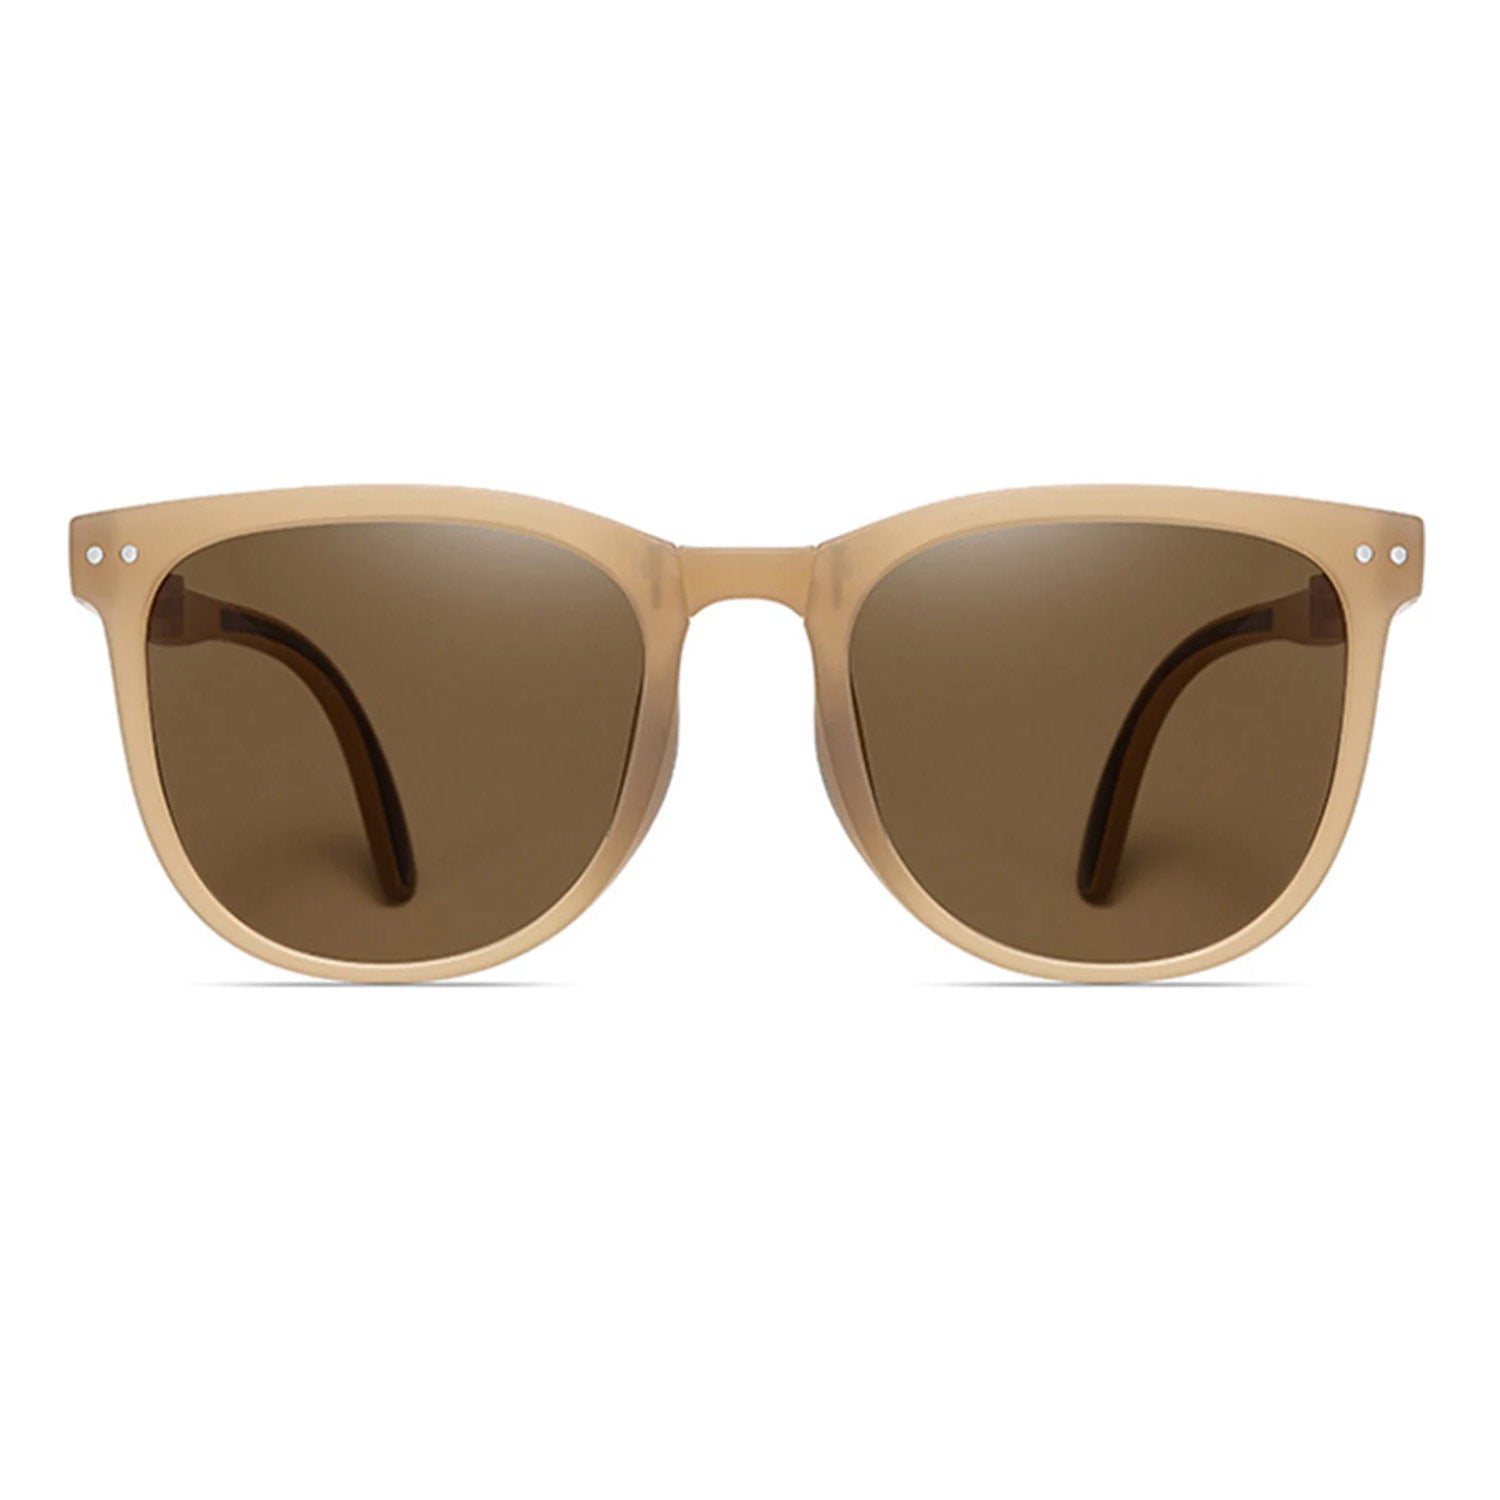 ELKLOOK Square Polarized Full-Rim Sunglasses For Women And Men 3-5 Day ...